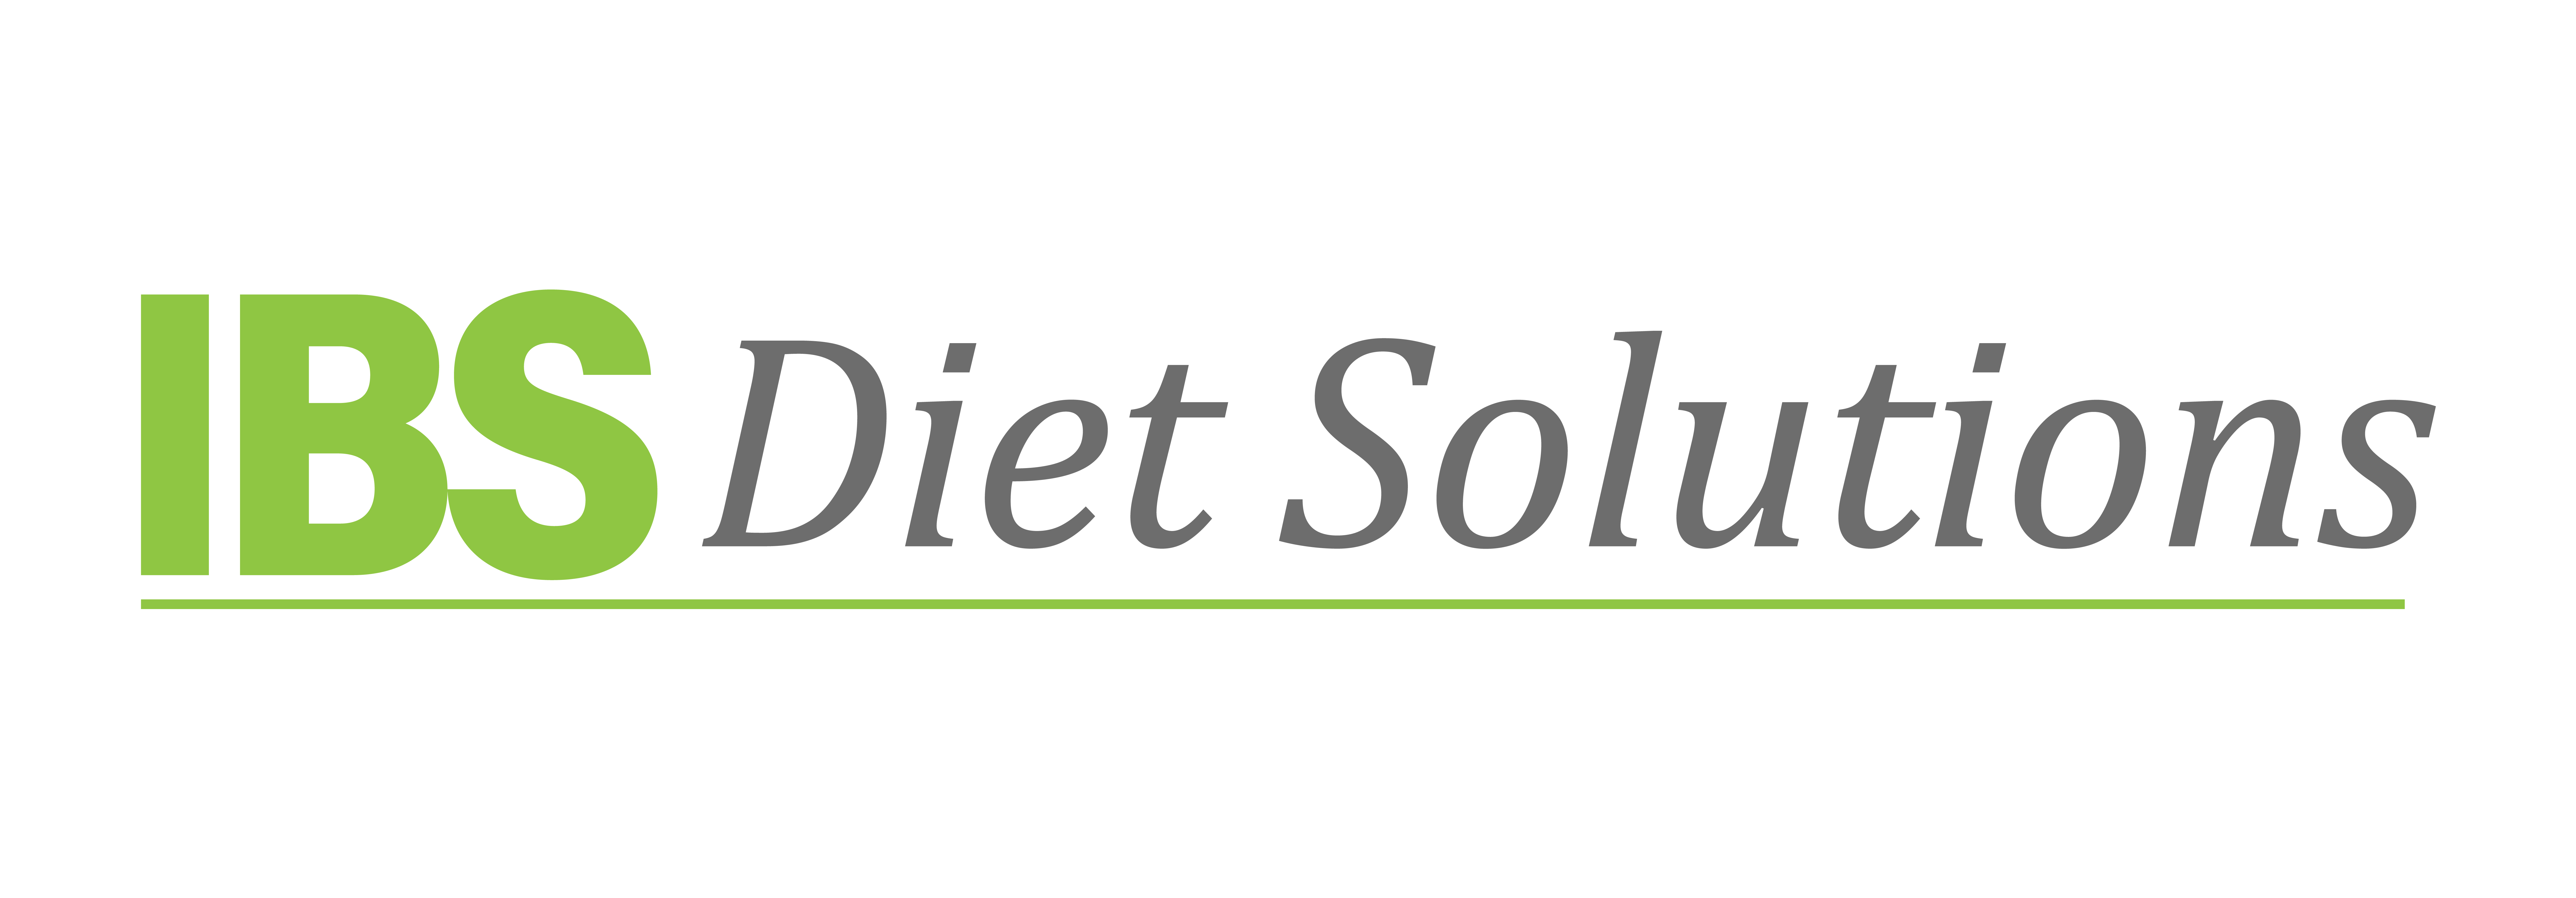 IBS Diet Solutions